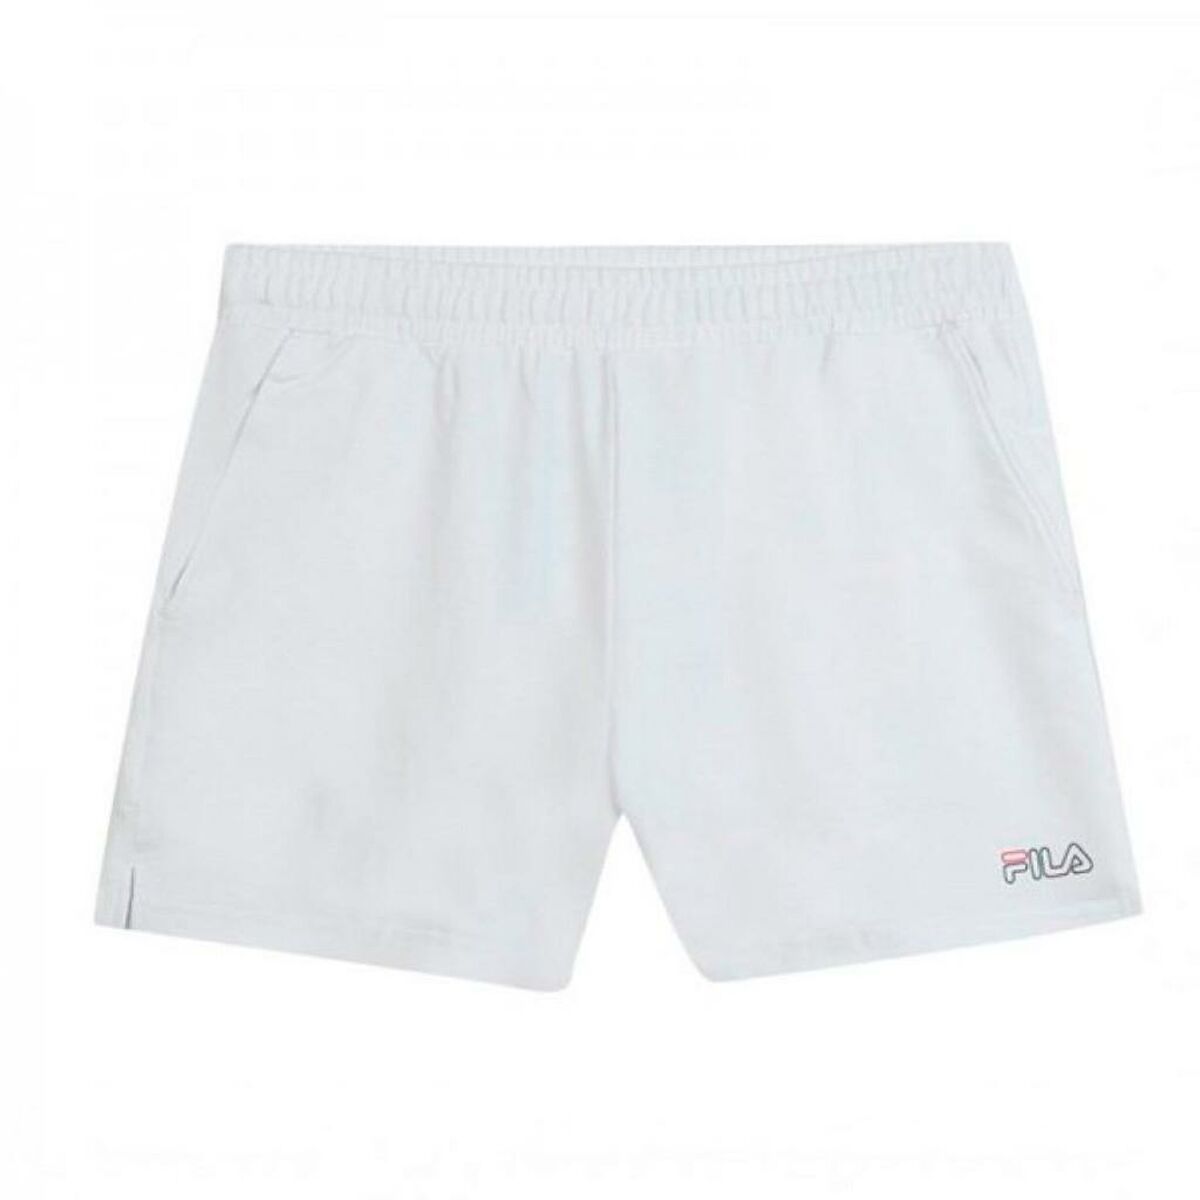 Sports Shorts for Women Fila FAW0520 10001 White